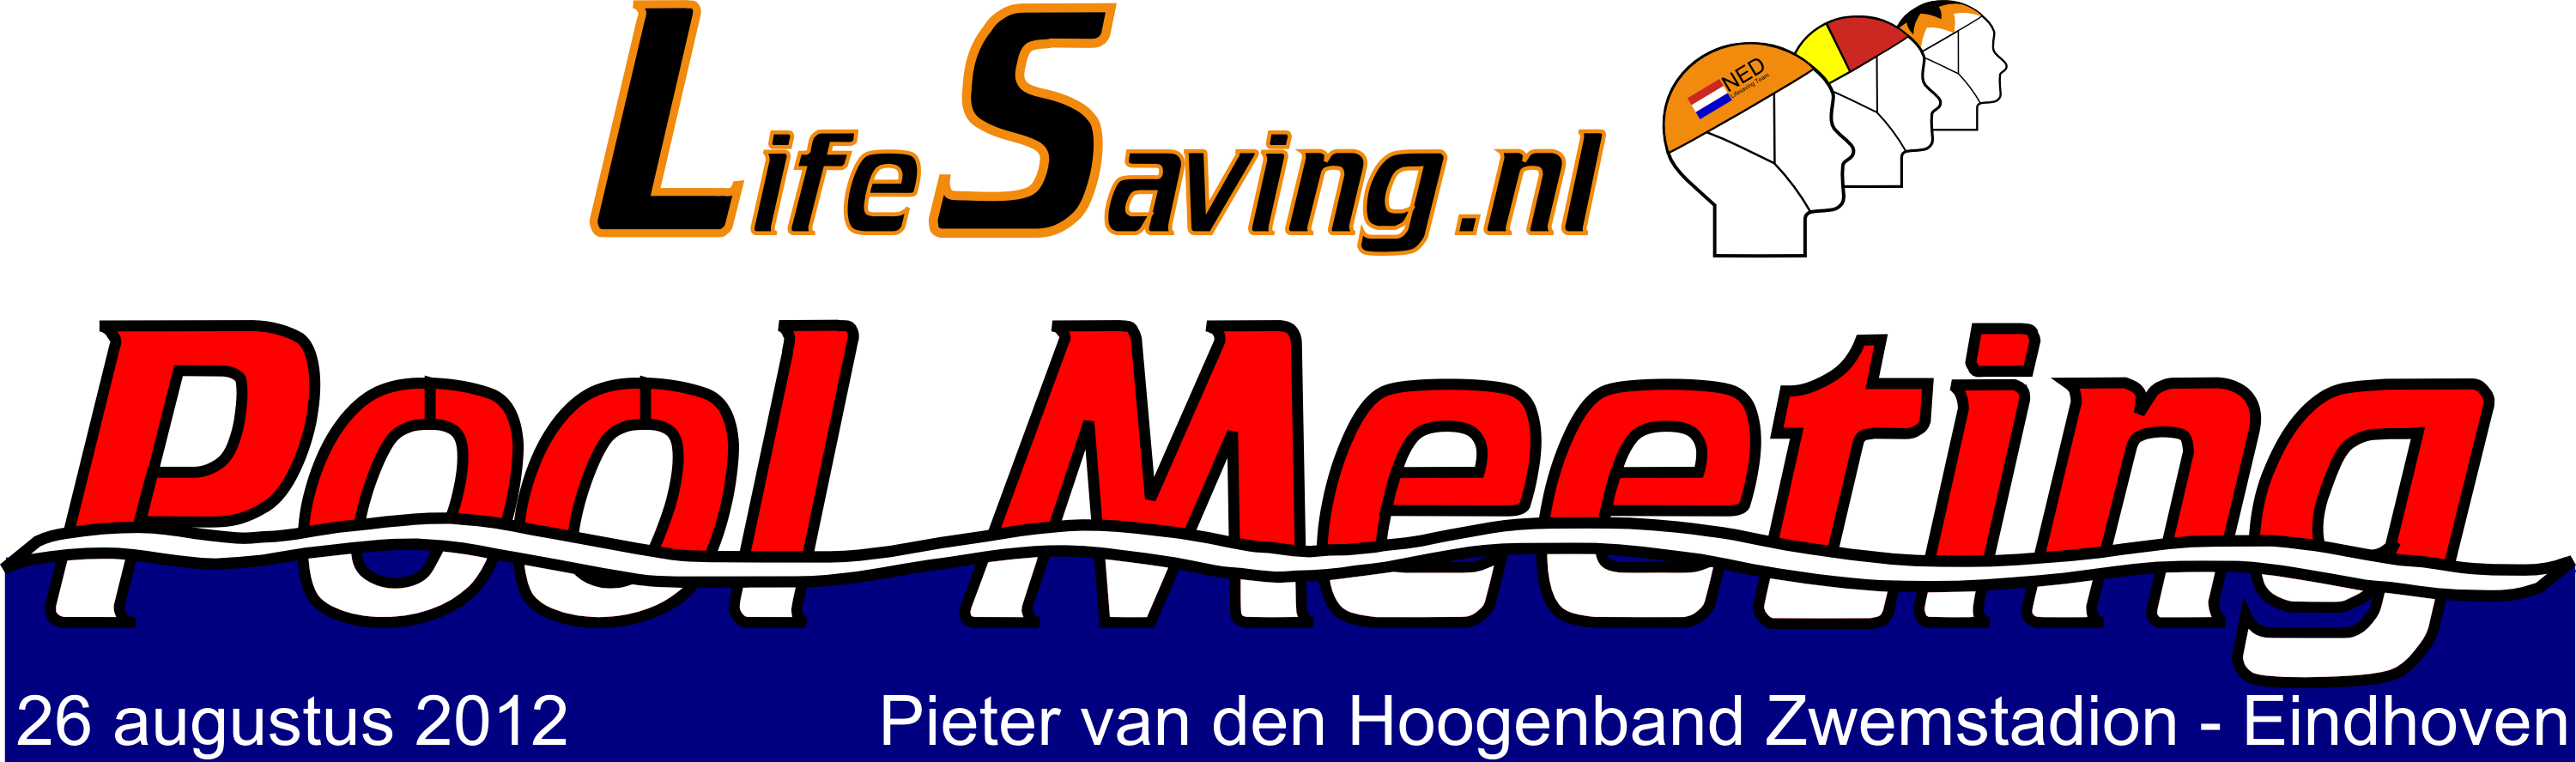 lifesaving.nl_pool-meeting2